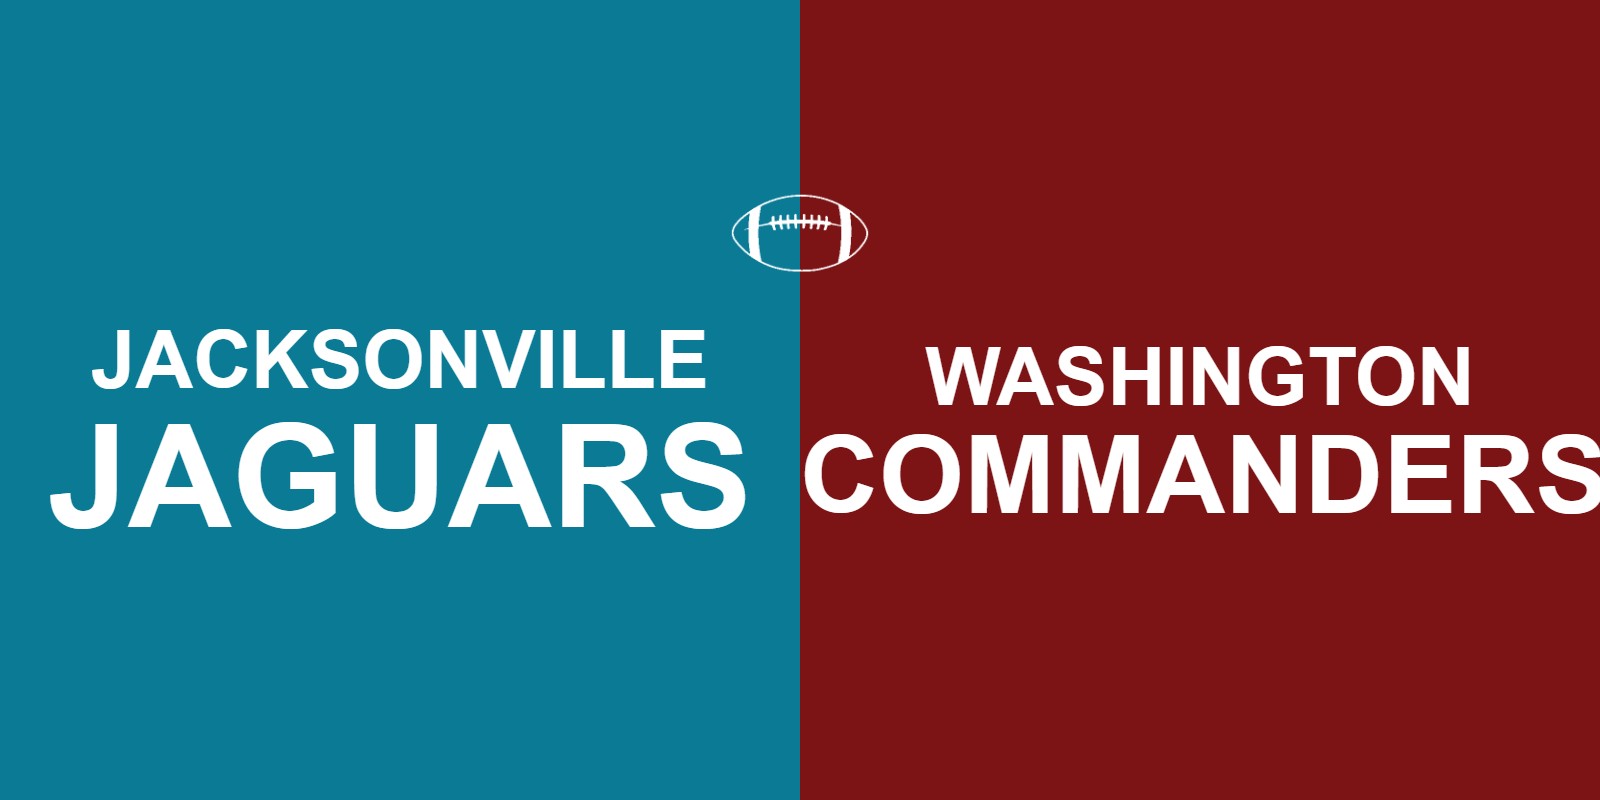 Jaguars vs Commanders